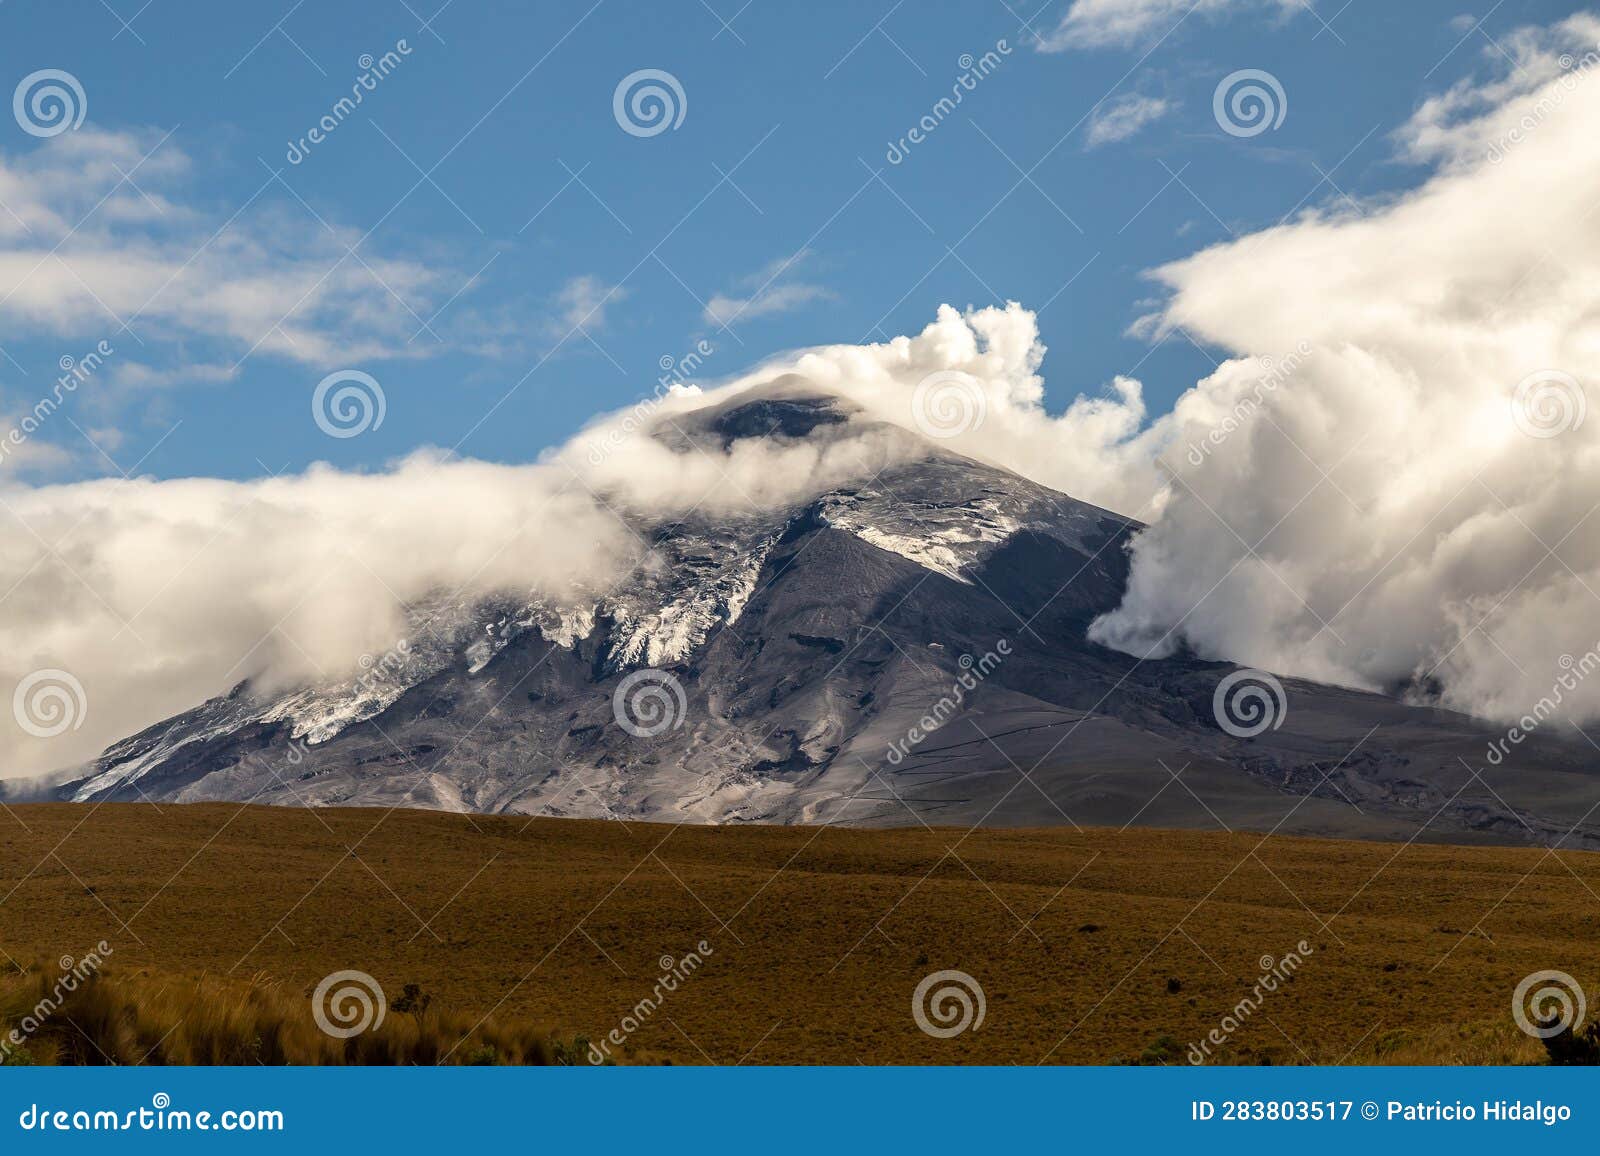 Cotopaxi volcano stock image. Image of intermitt, peak - 283803517